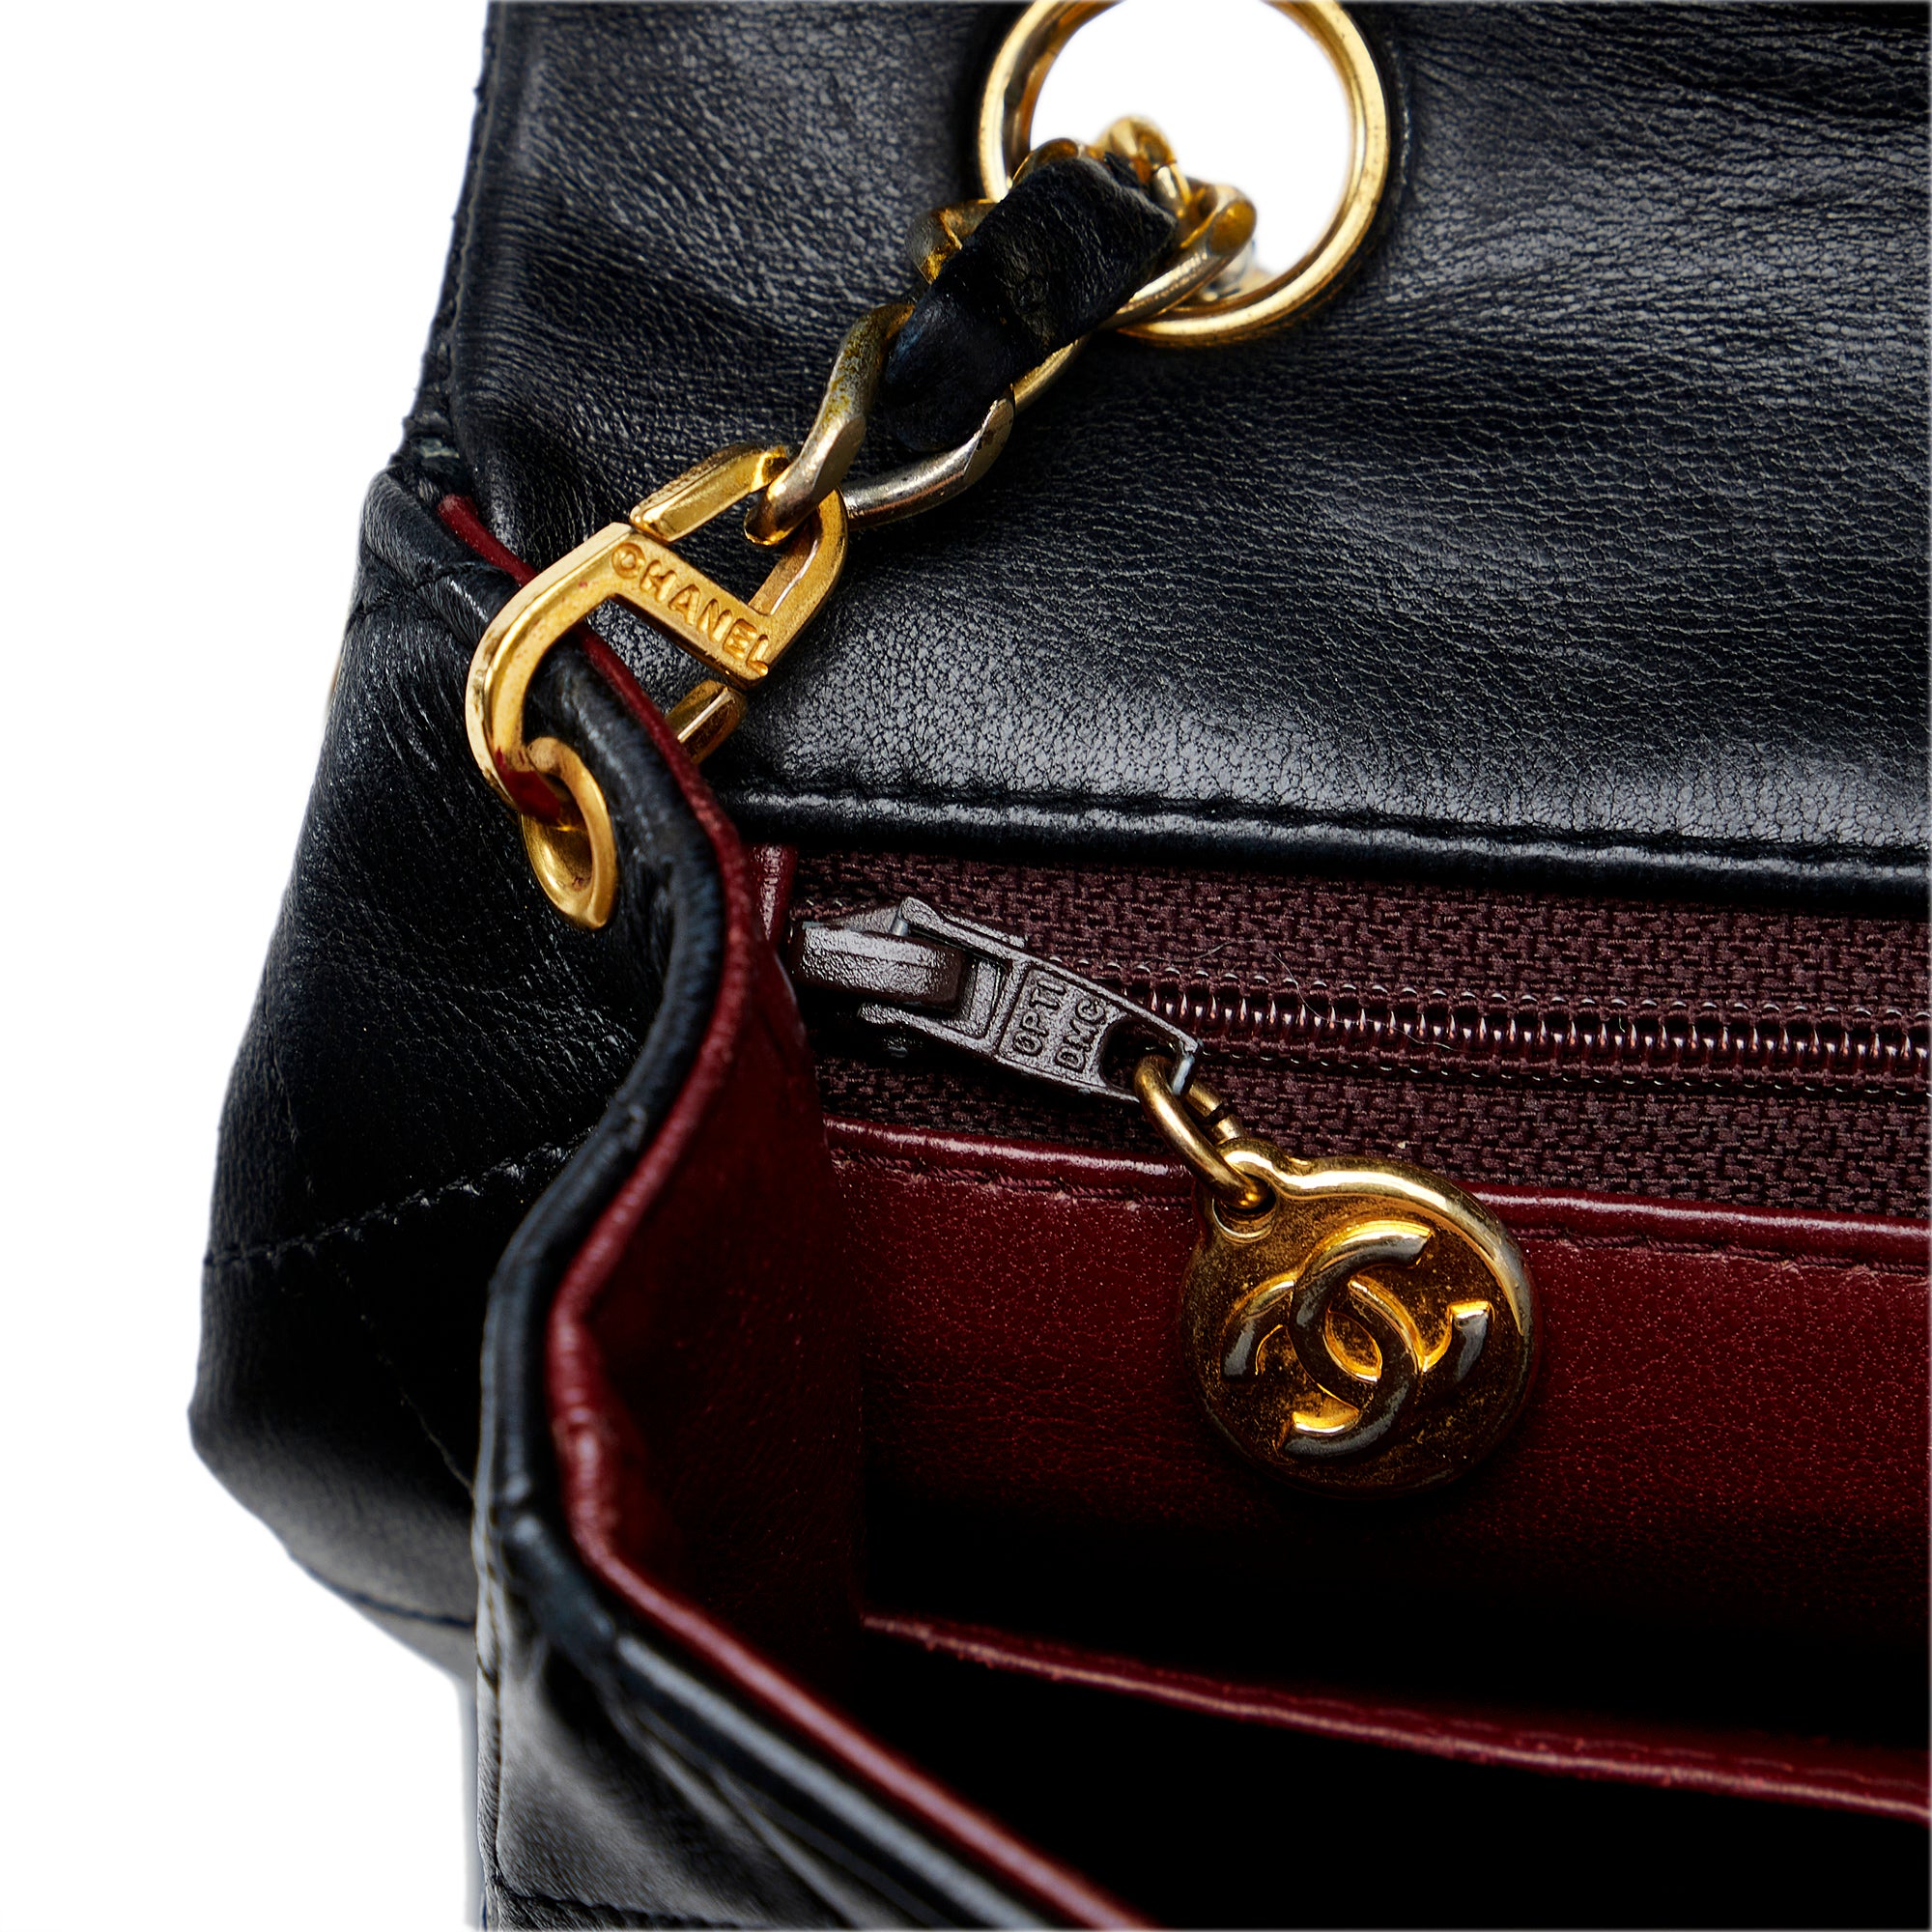 Black Chanel Medium Classic Lambskin Single Flap Bag